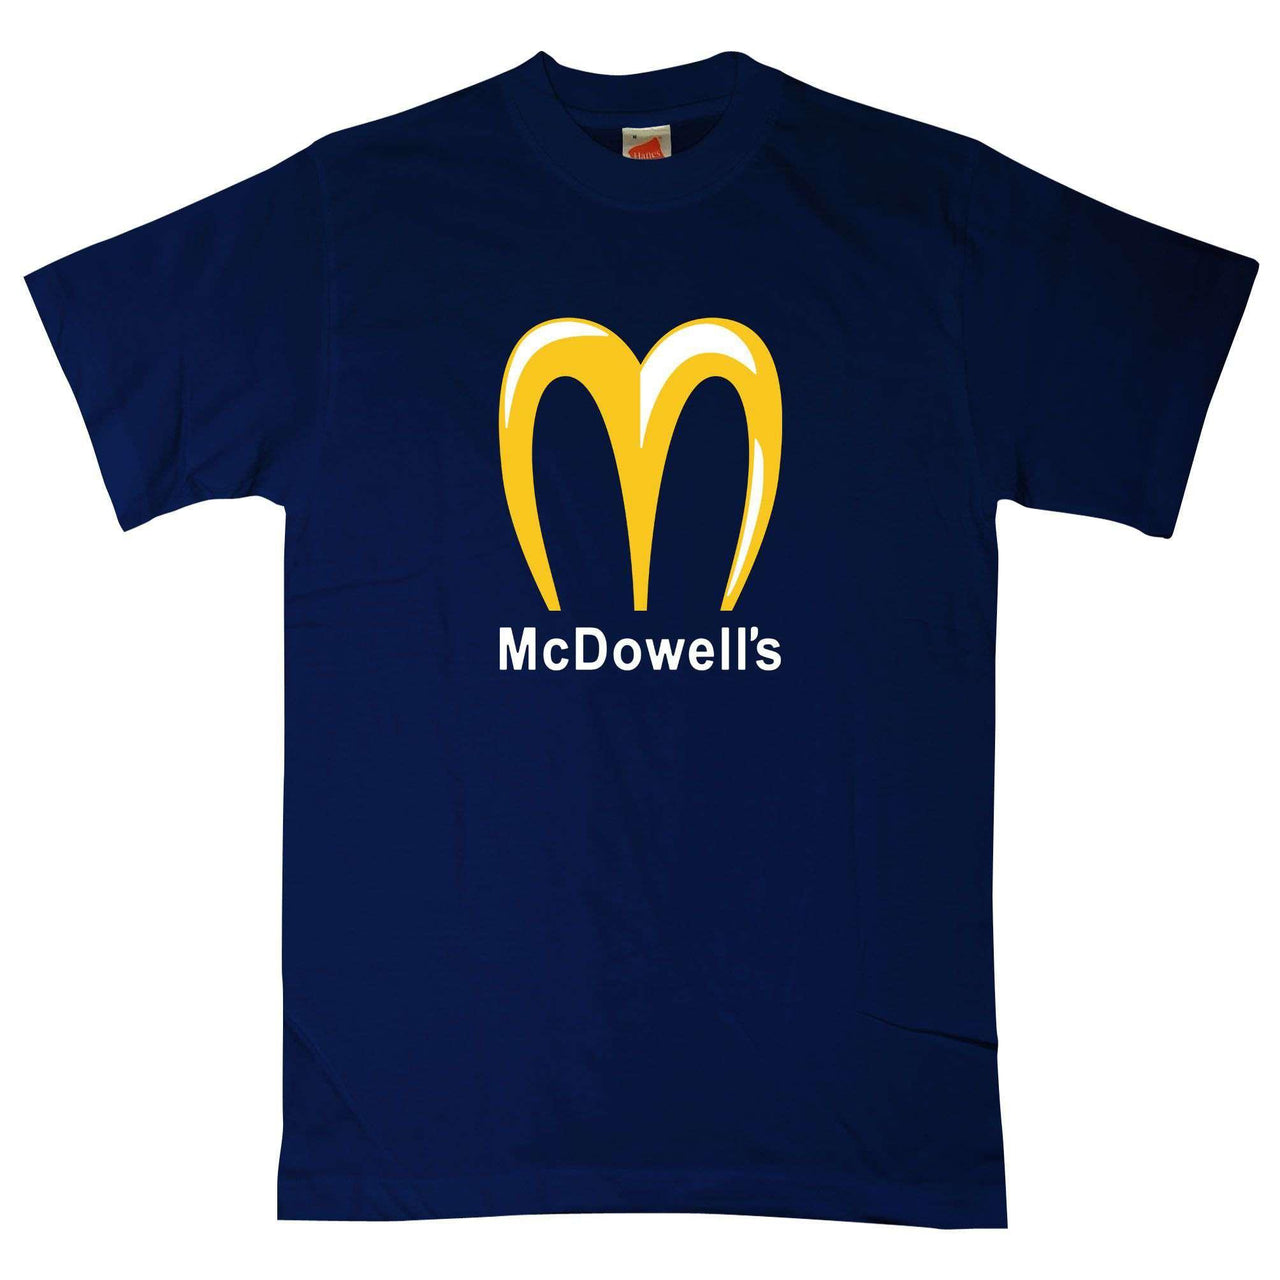 McDowells Unisex T-Shirt For Men And Women 8Ball